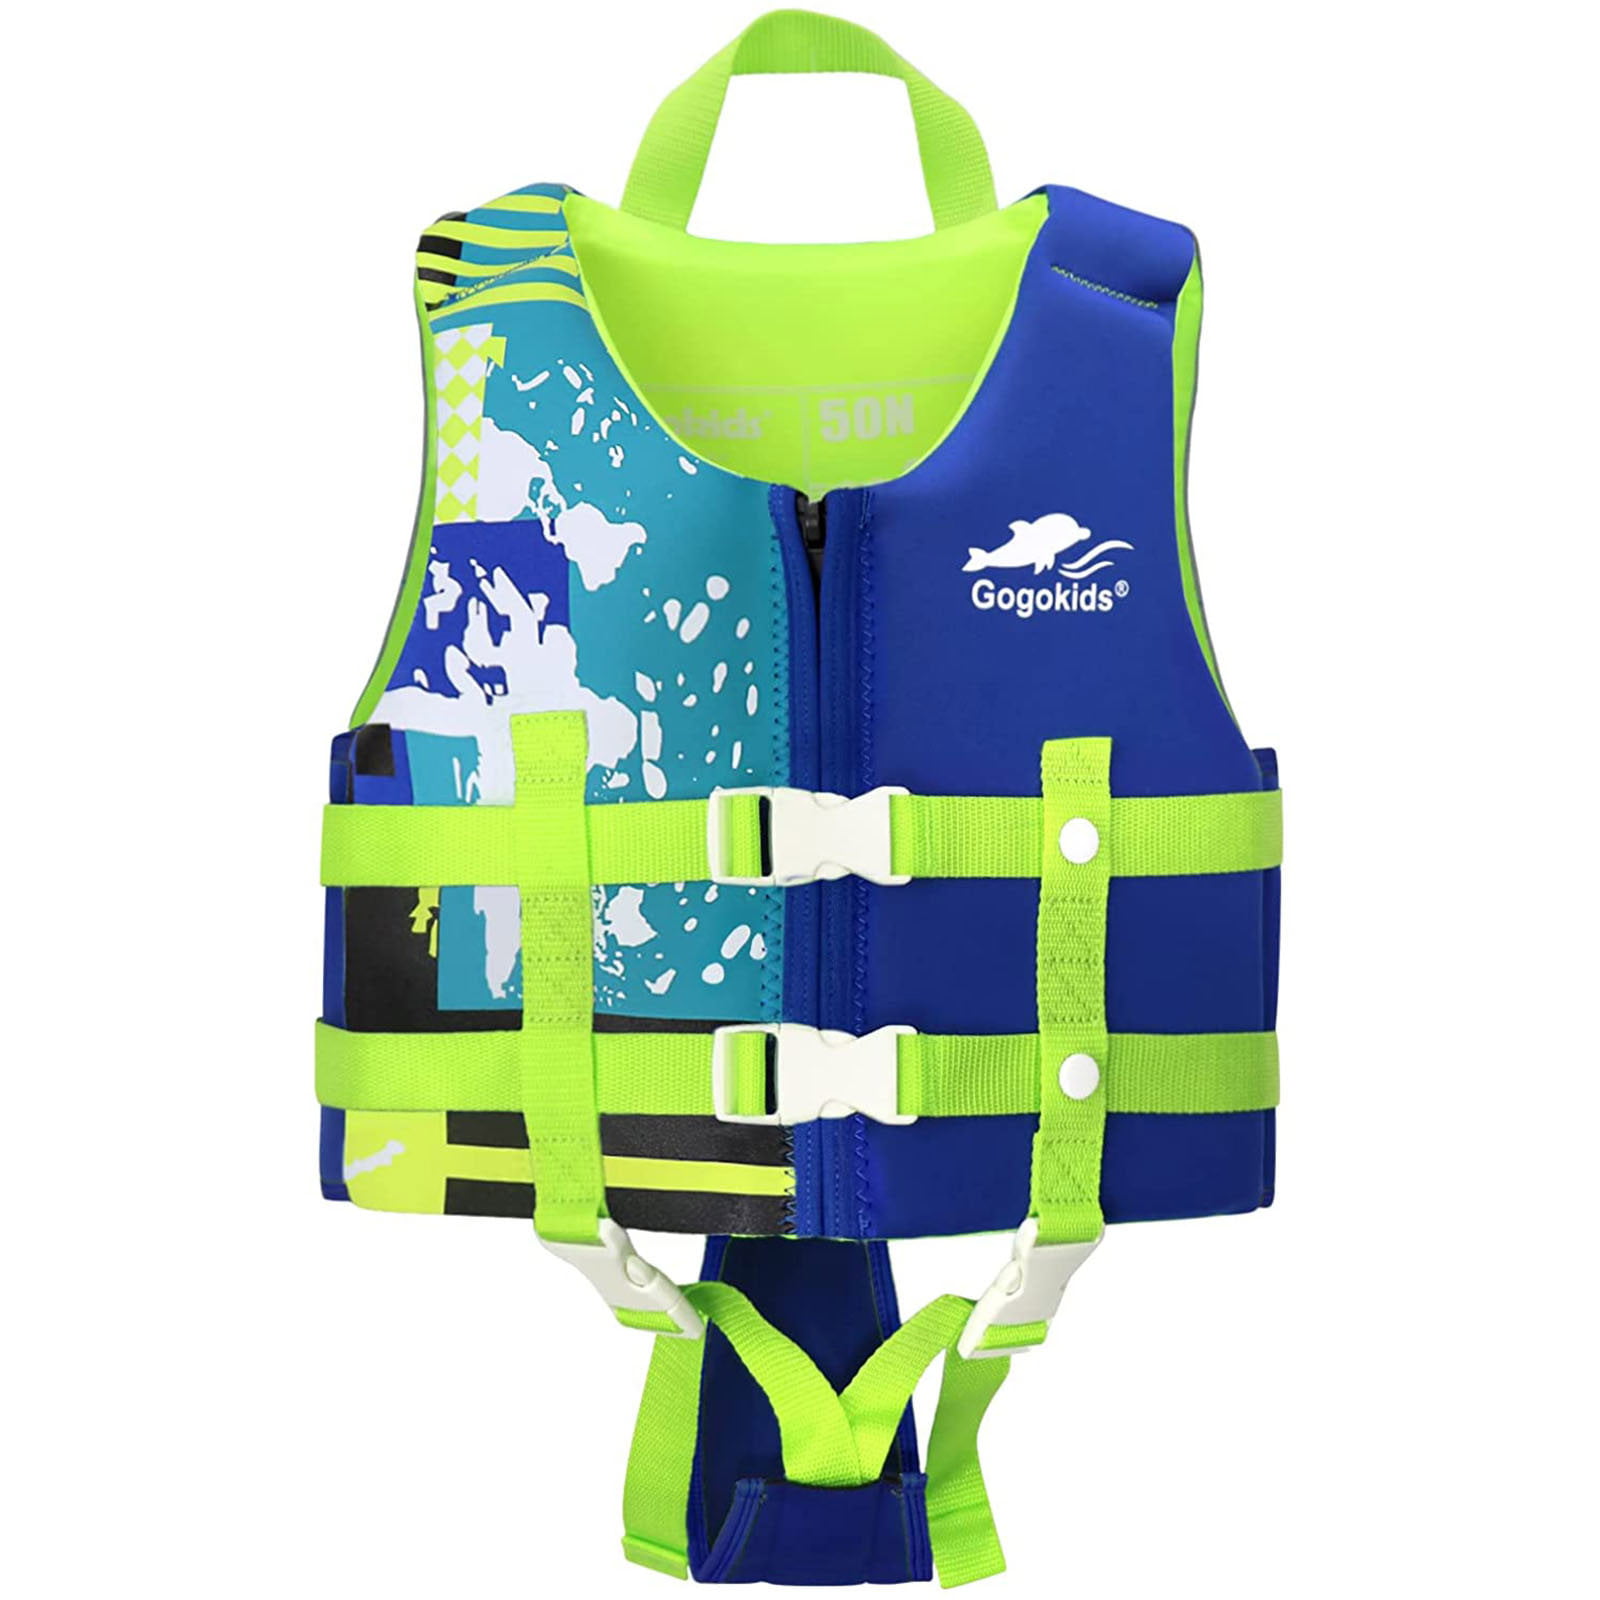 Classic Series Swim Vest Float Jacket Buoyancy Swim Wear for Boys Girls Baby Kids Cartoon Life Jackets from 30 to 50lbs 